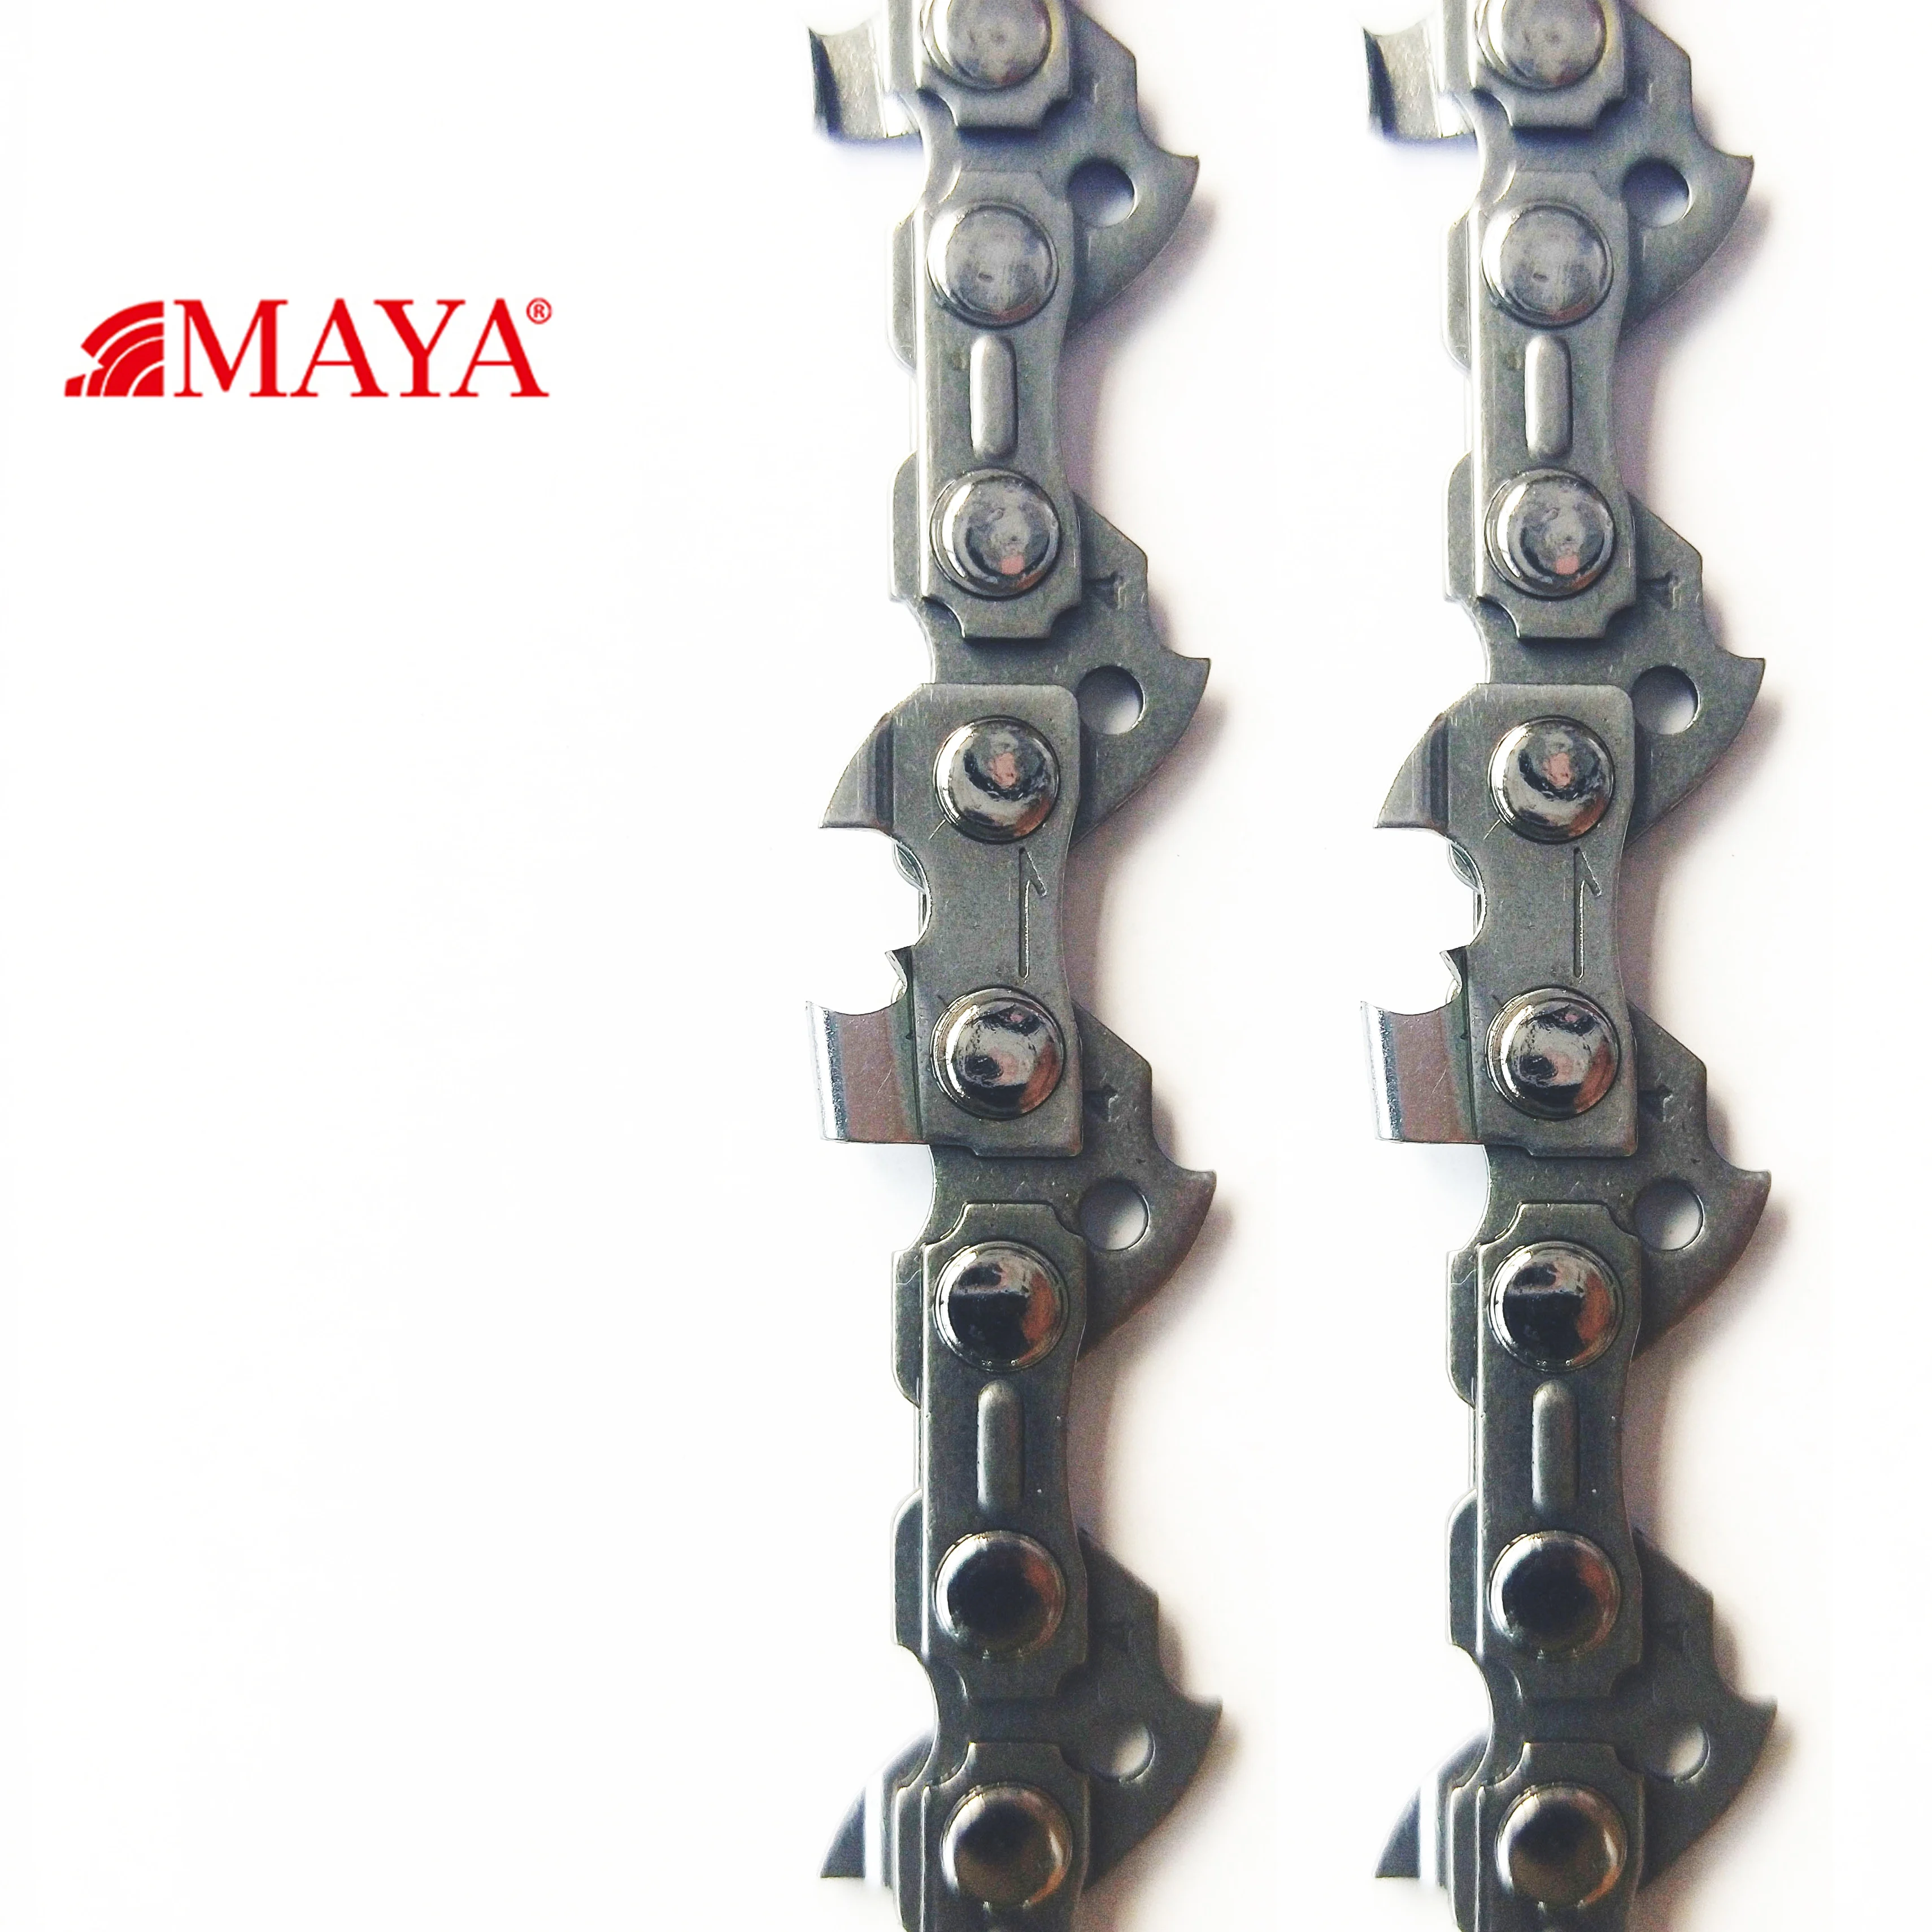 

High quality 100feet MAYA carbide saw chain 3 / 8 " lp .050" for chainsaw